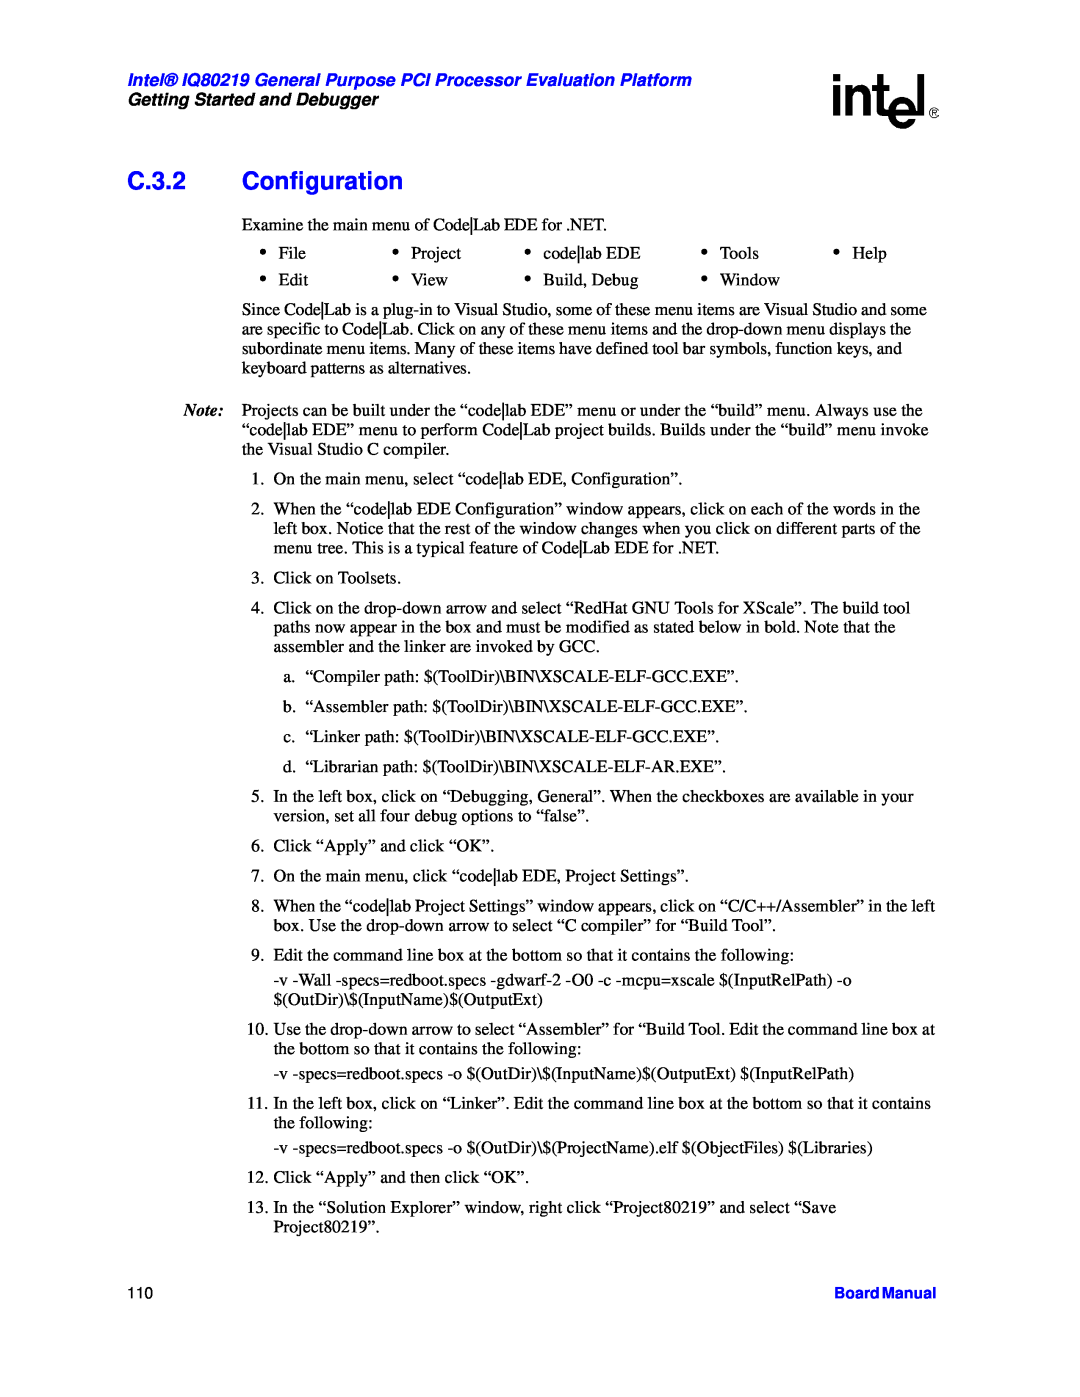 Intel manual C.3.2, Configuration, Intel IQ80219 General Purpose PCI Processor Evaluation Platform 